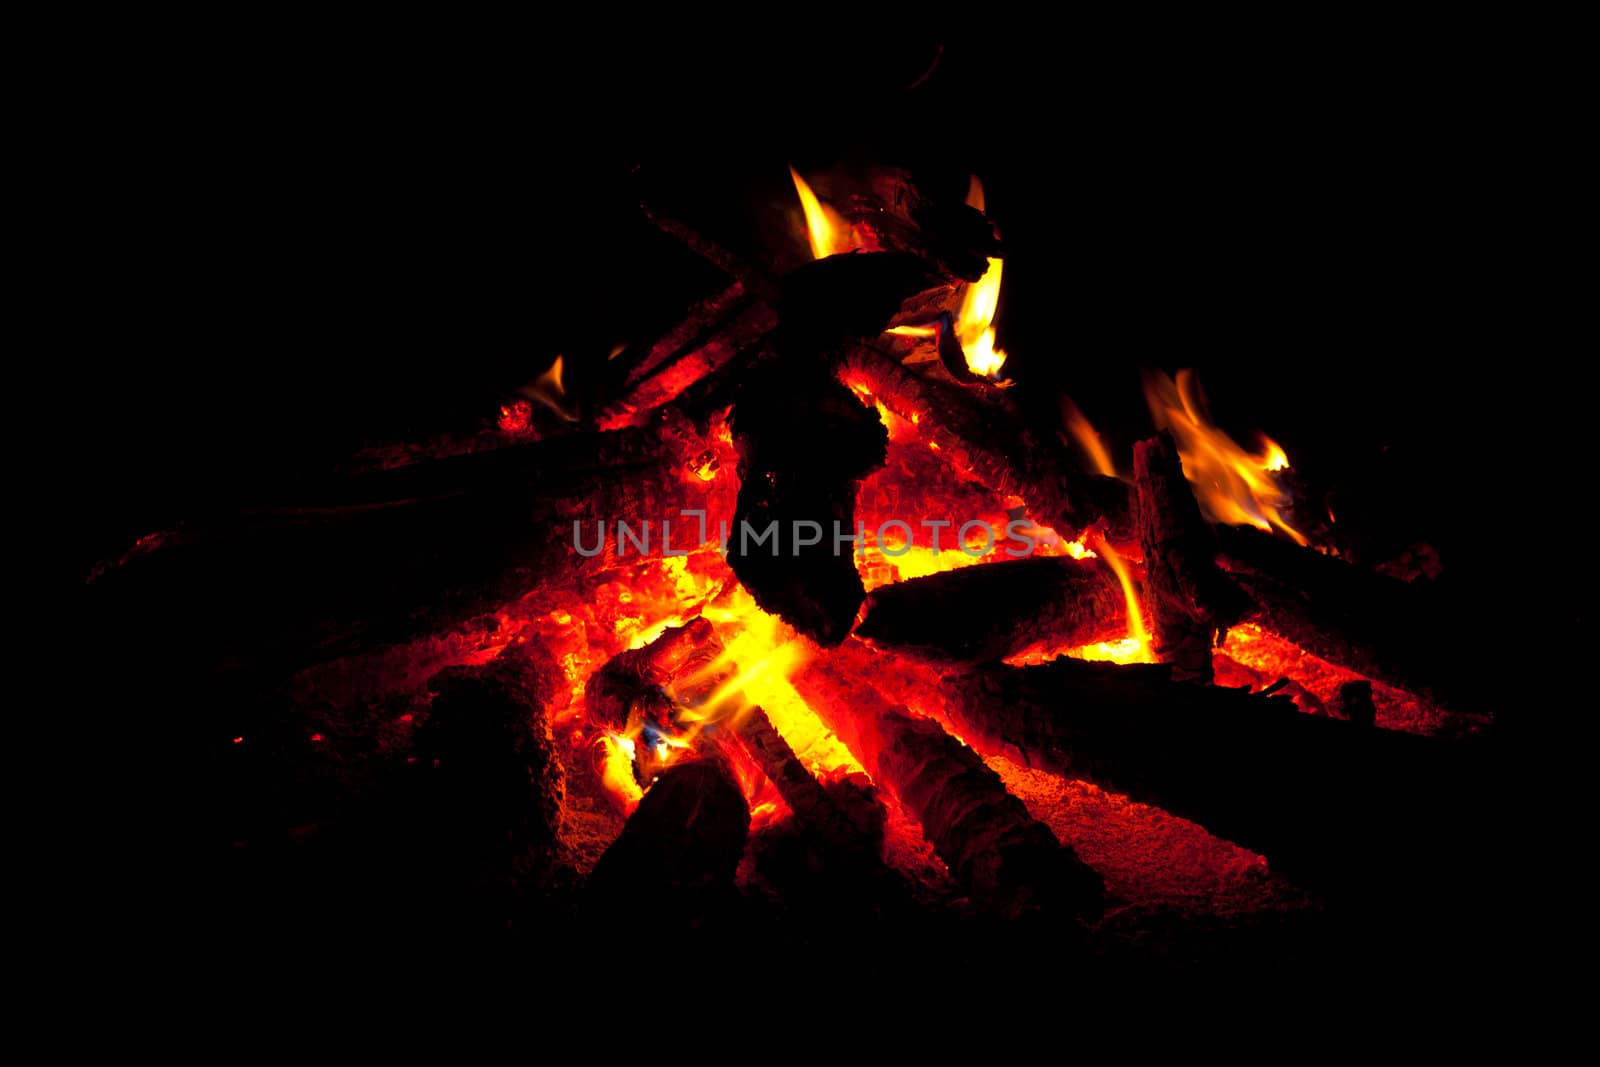 Campfire by dimol